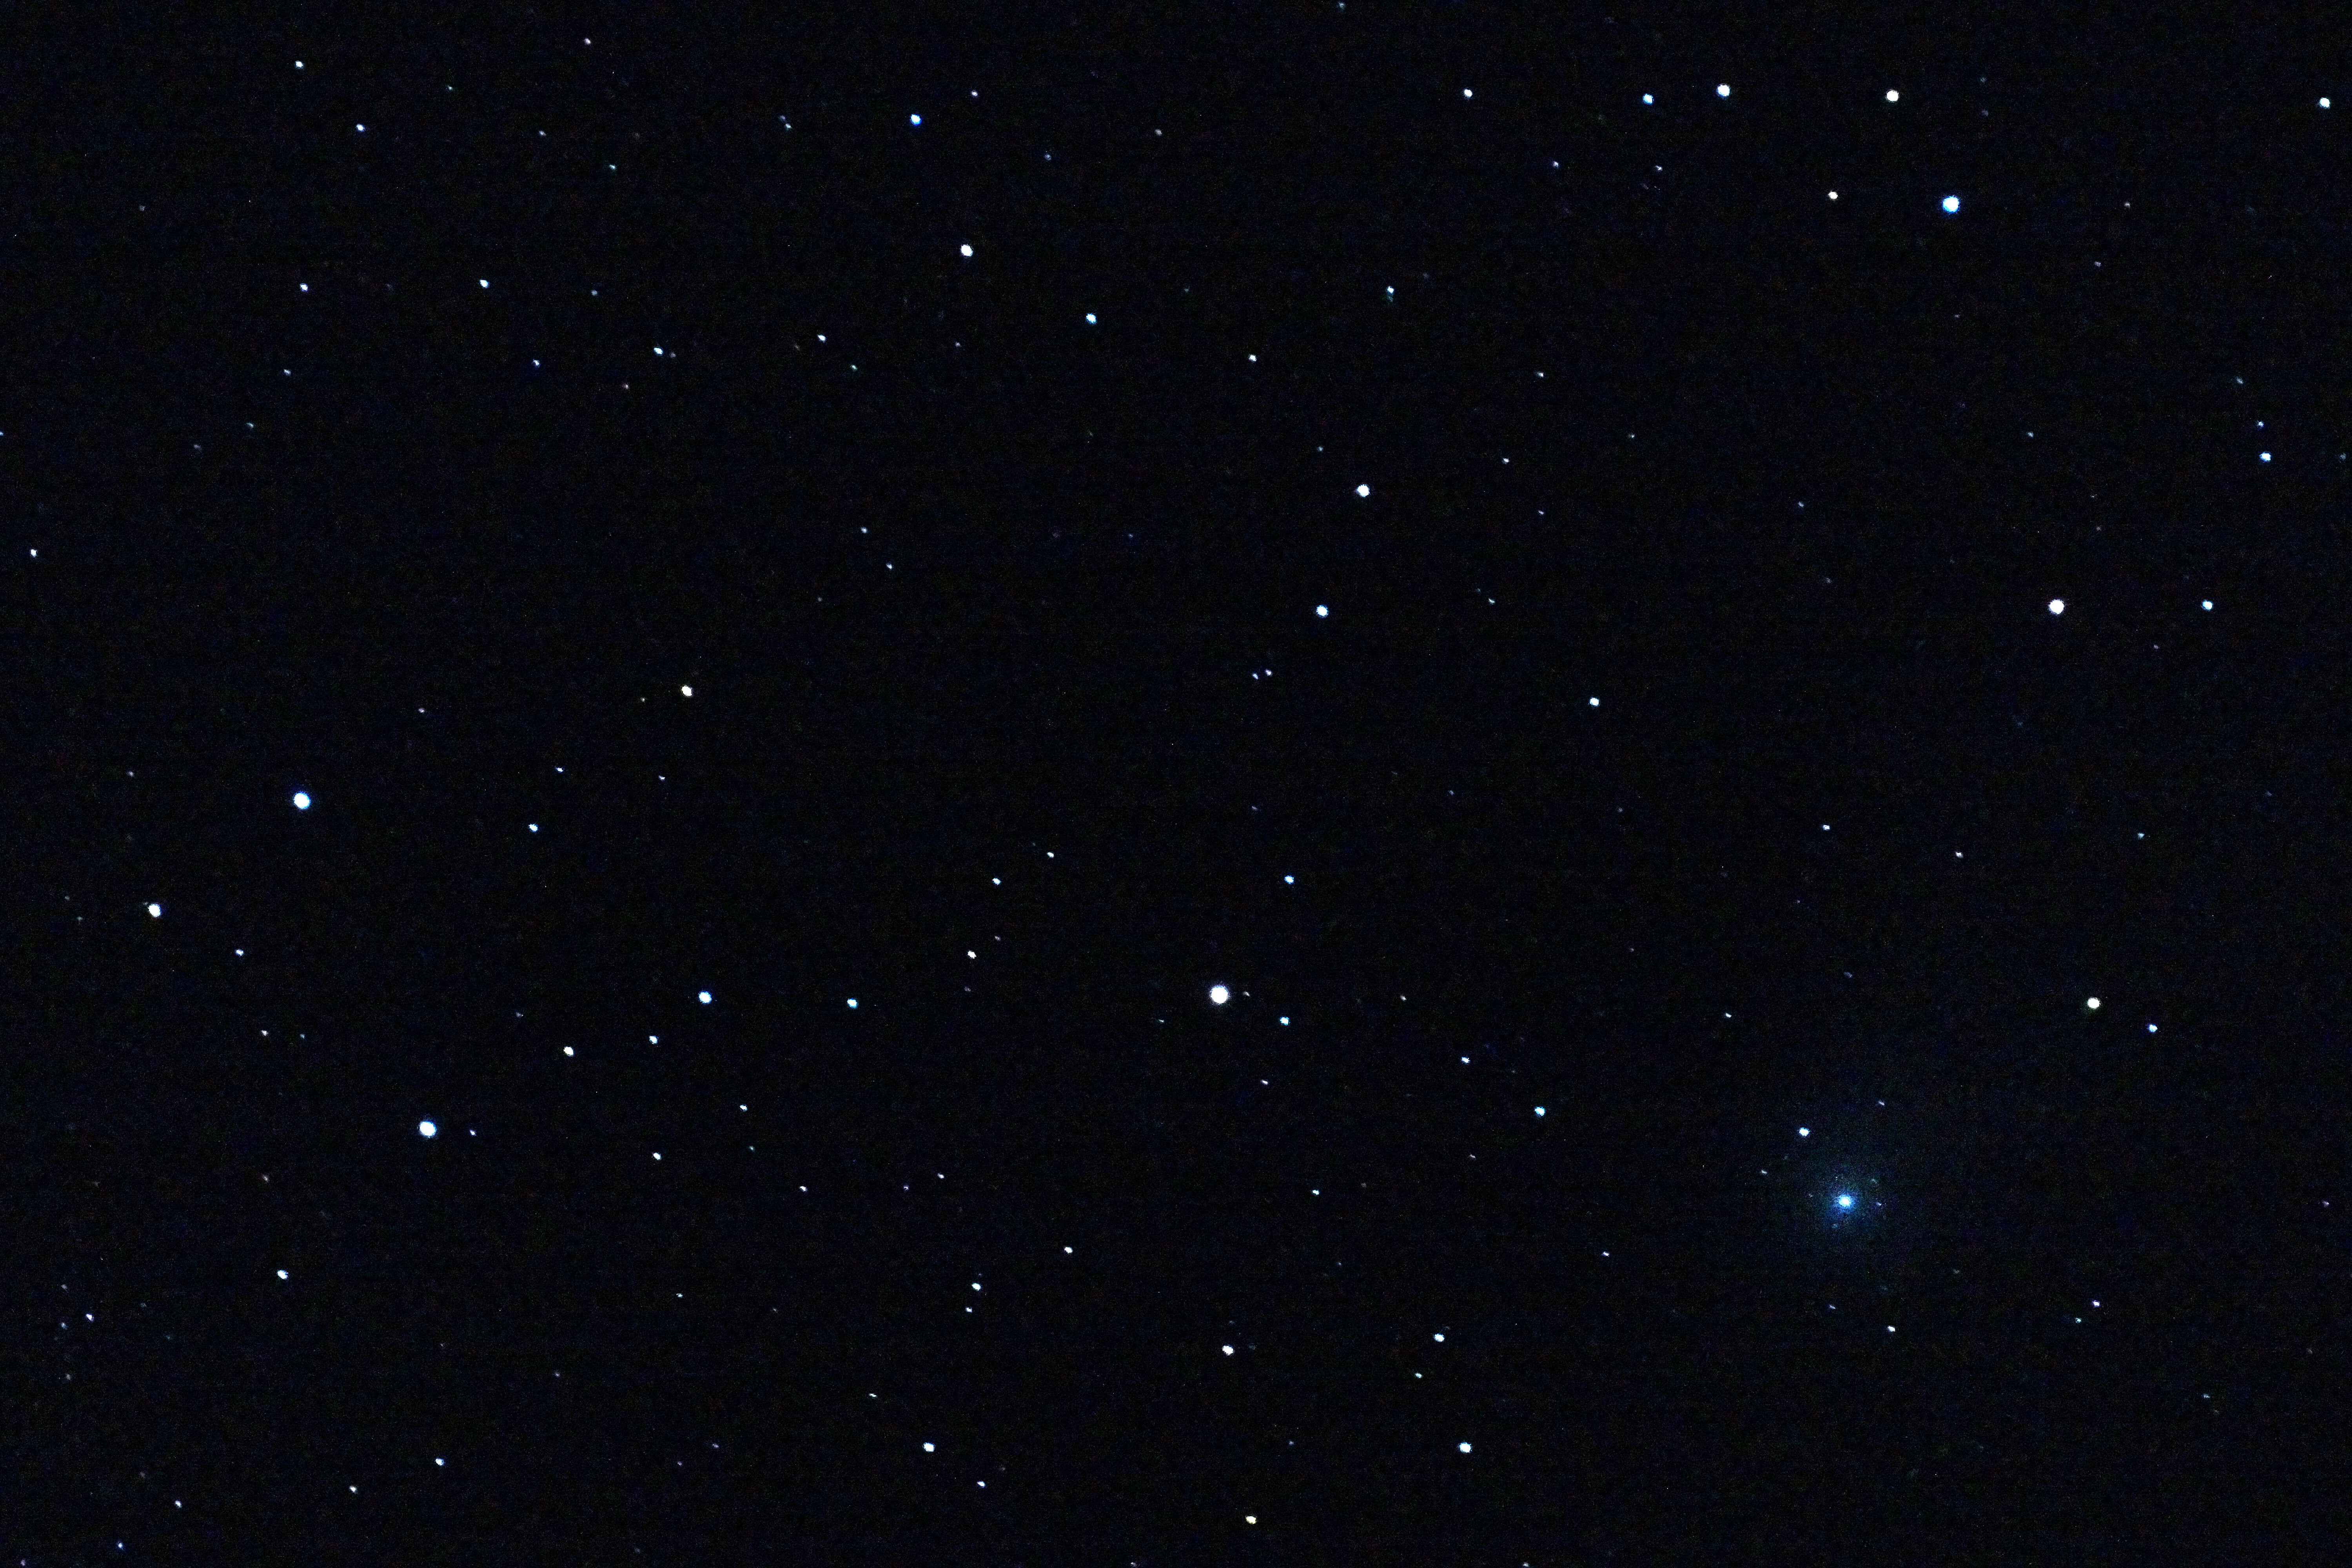 Comet C2013 Catallina